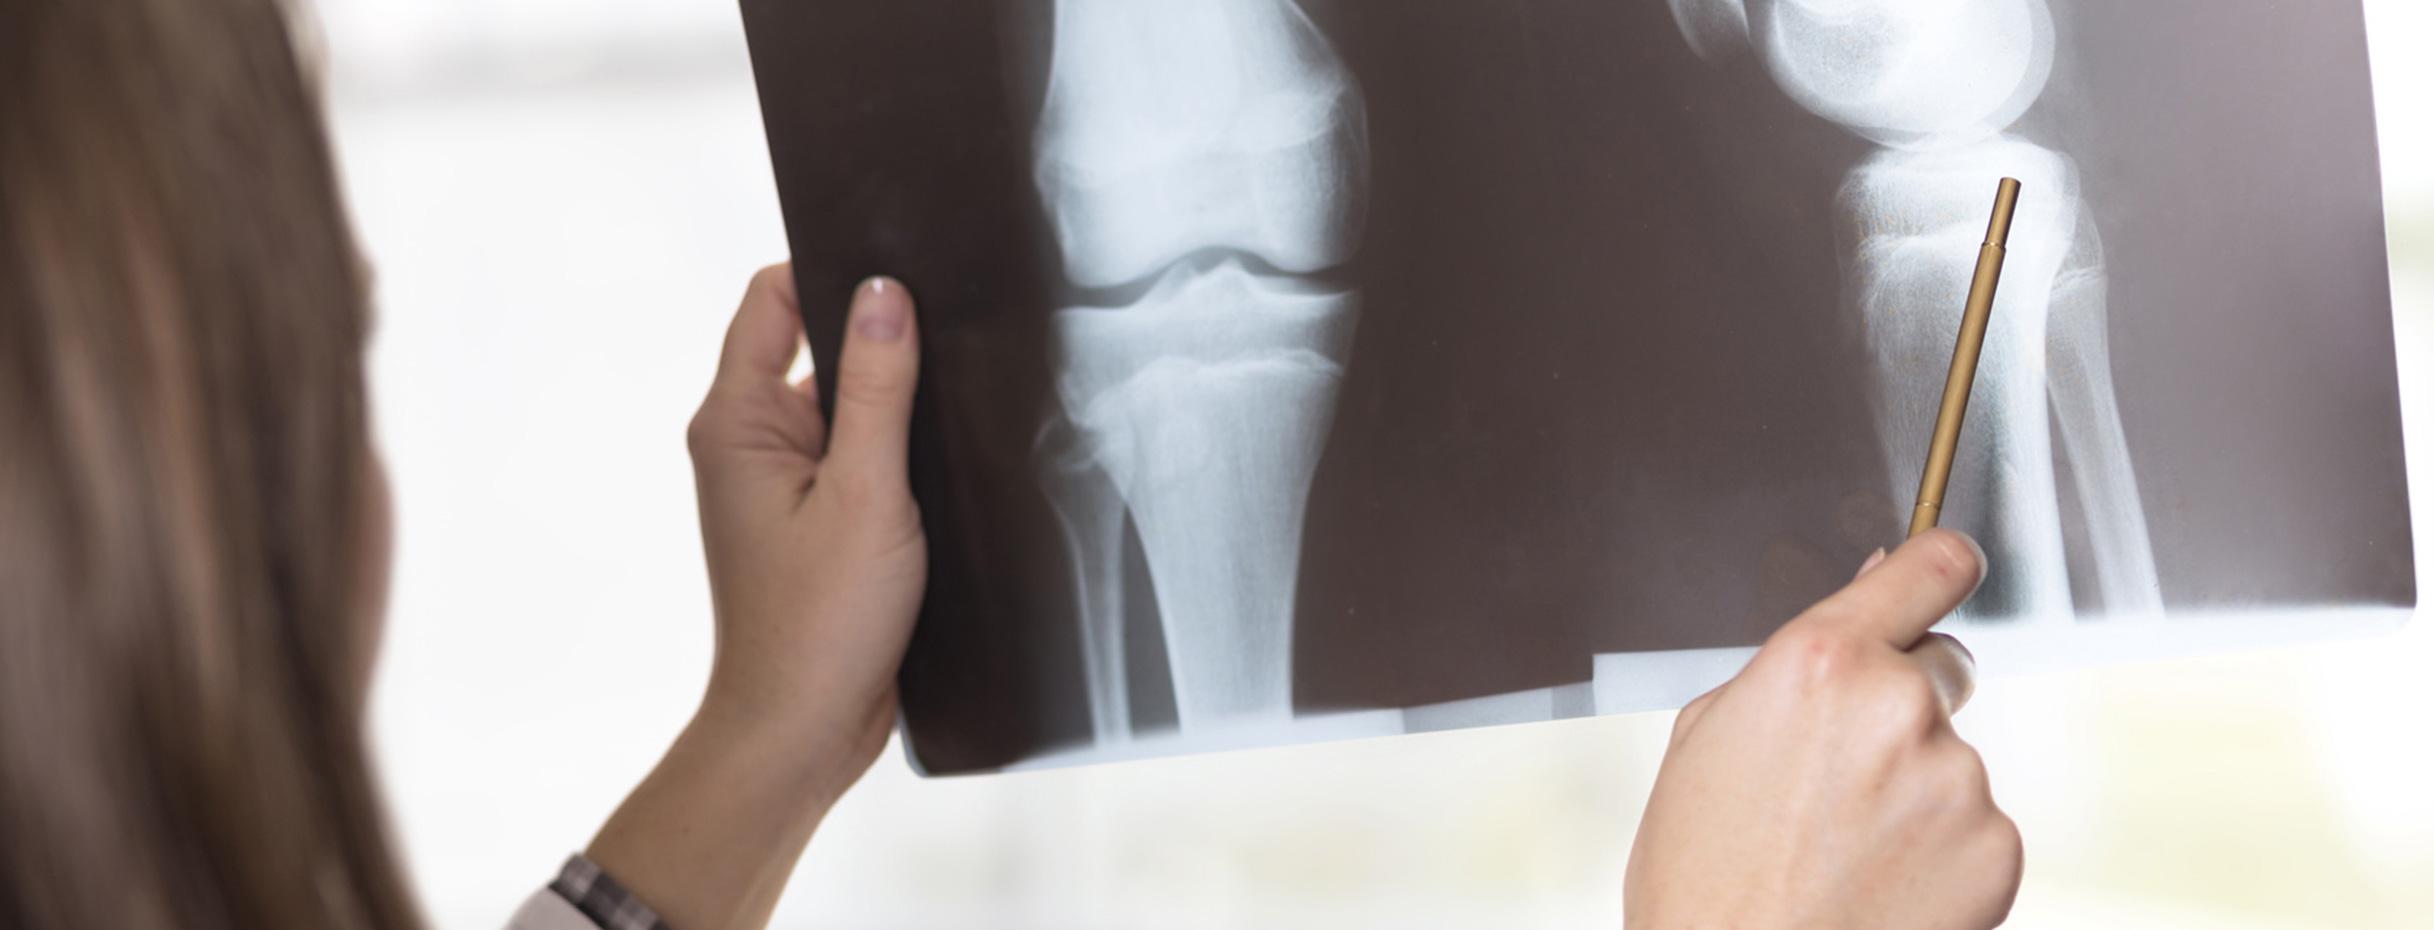 Ärztin schaut sich Röntgenbild eines Kniegelenks an